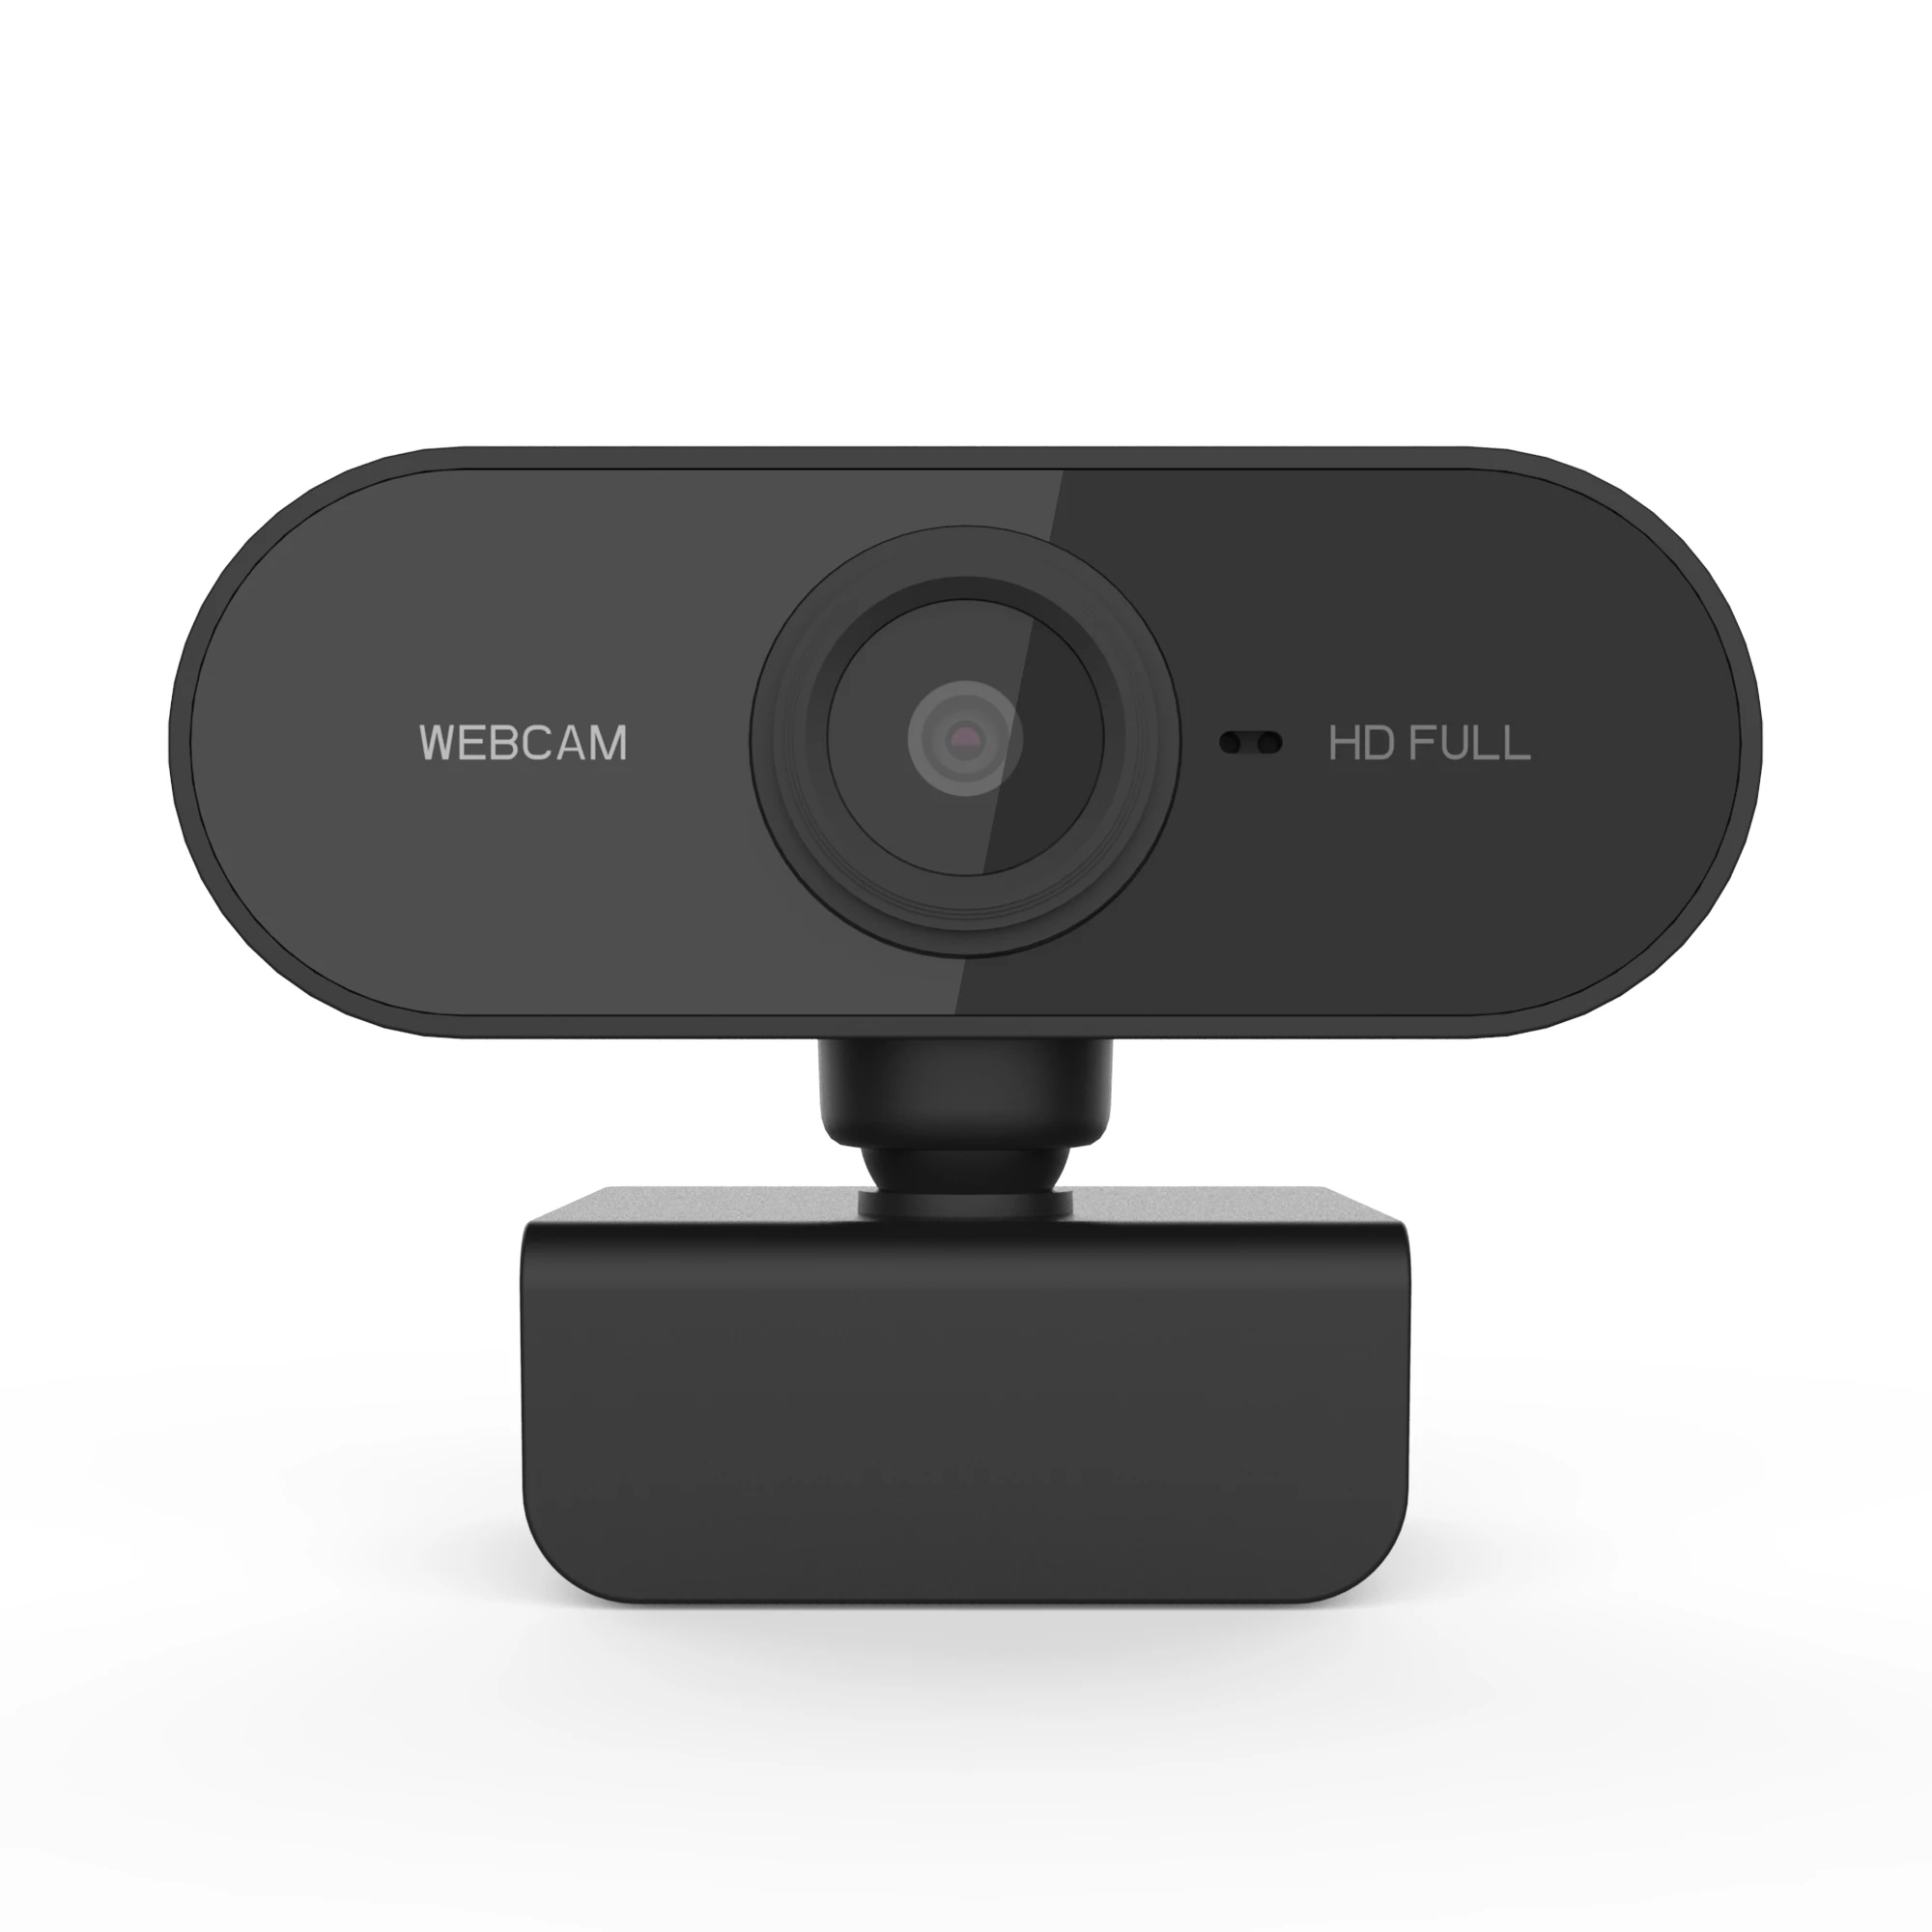 2020 Amazon Hot cheap 1080p hd pro streaming ladtop 4k camara webcam for PC Smart tv Desktop